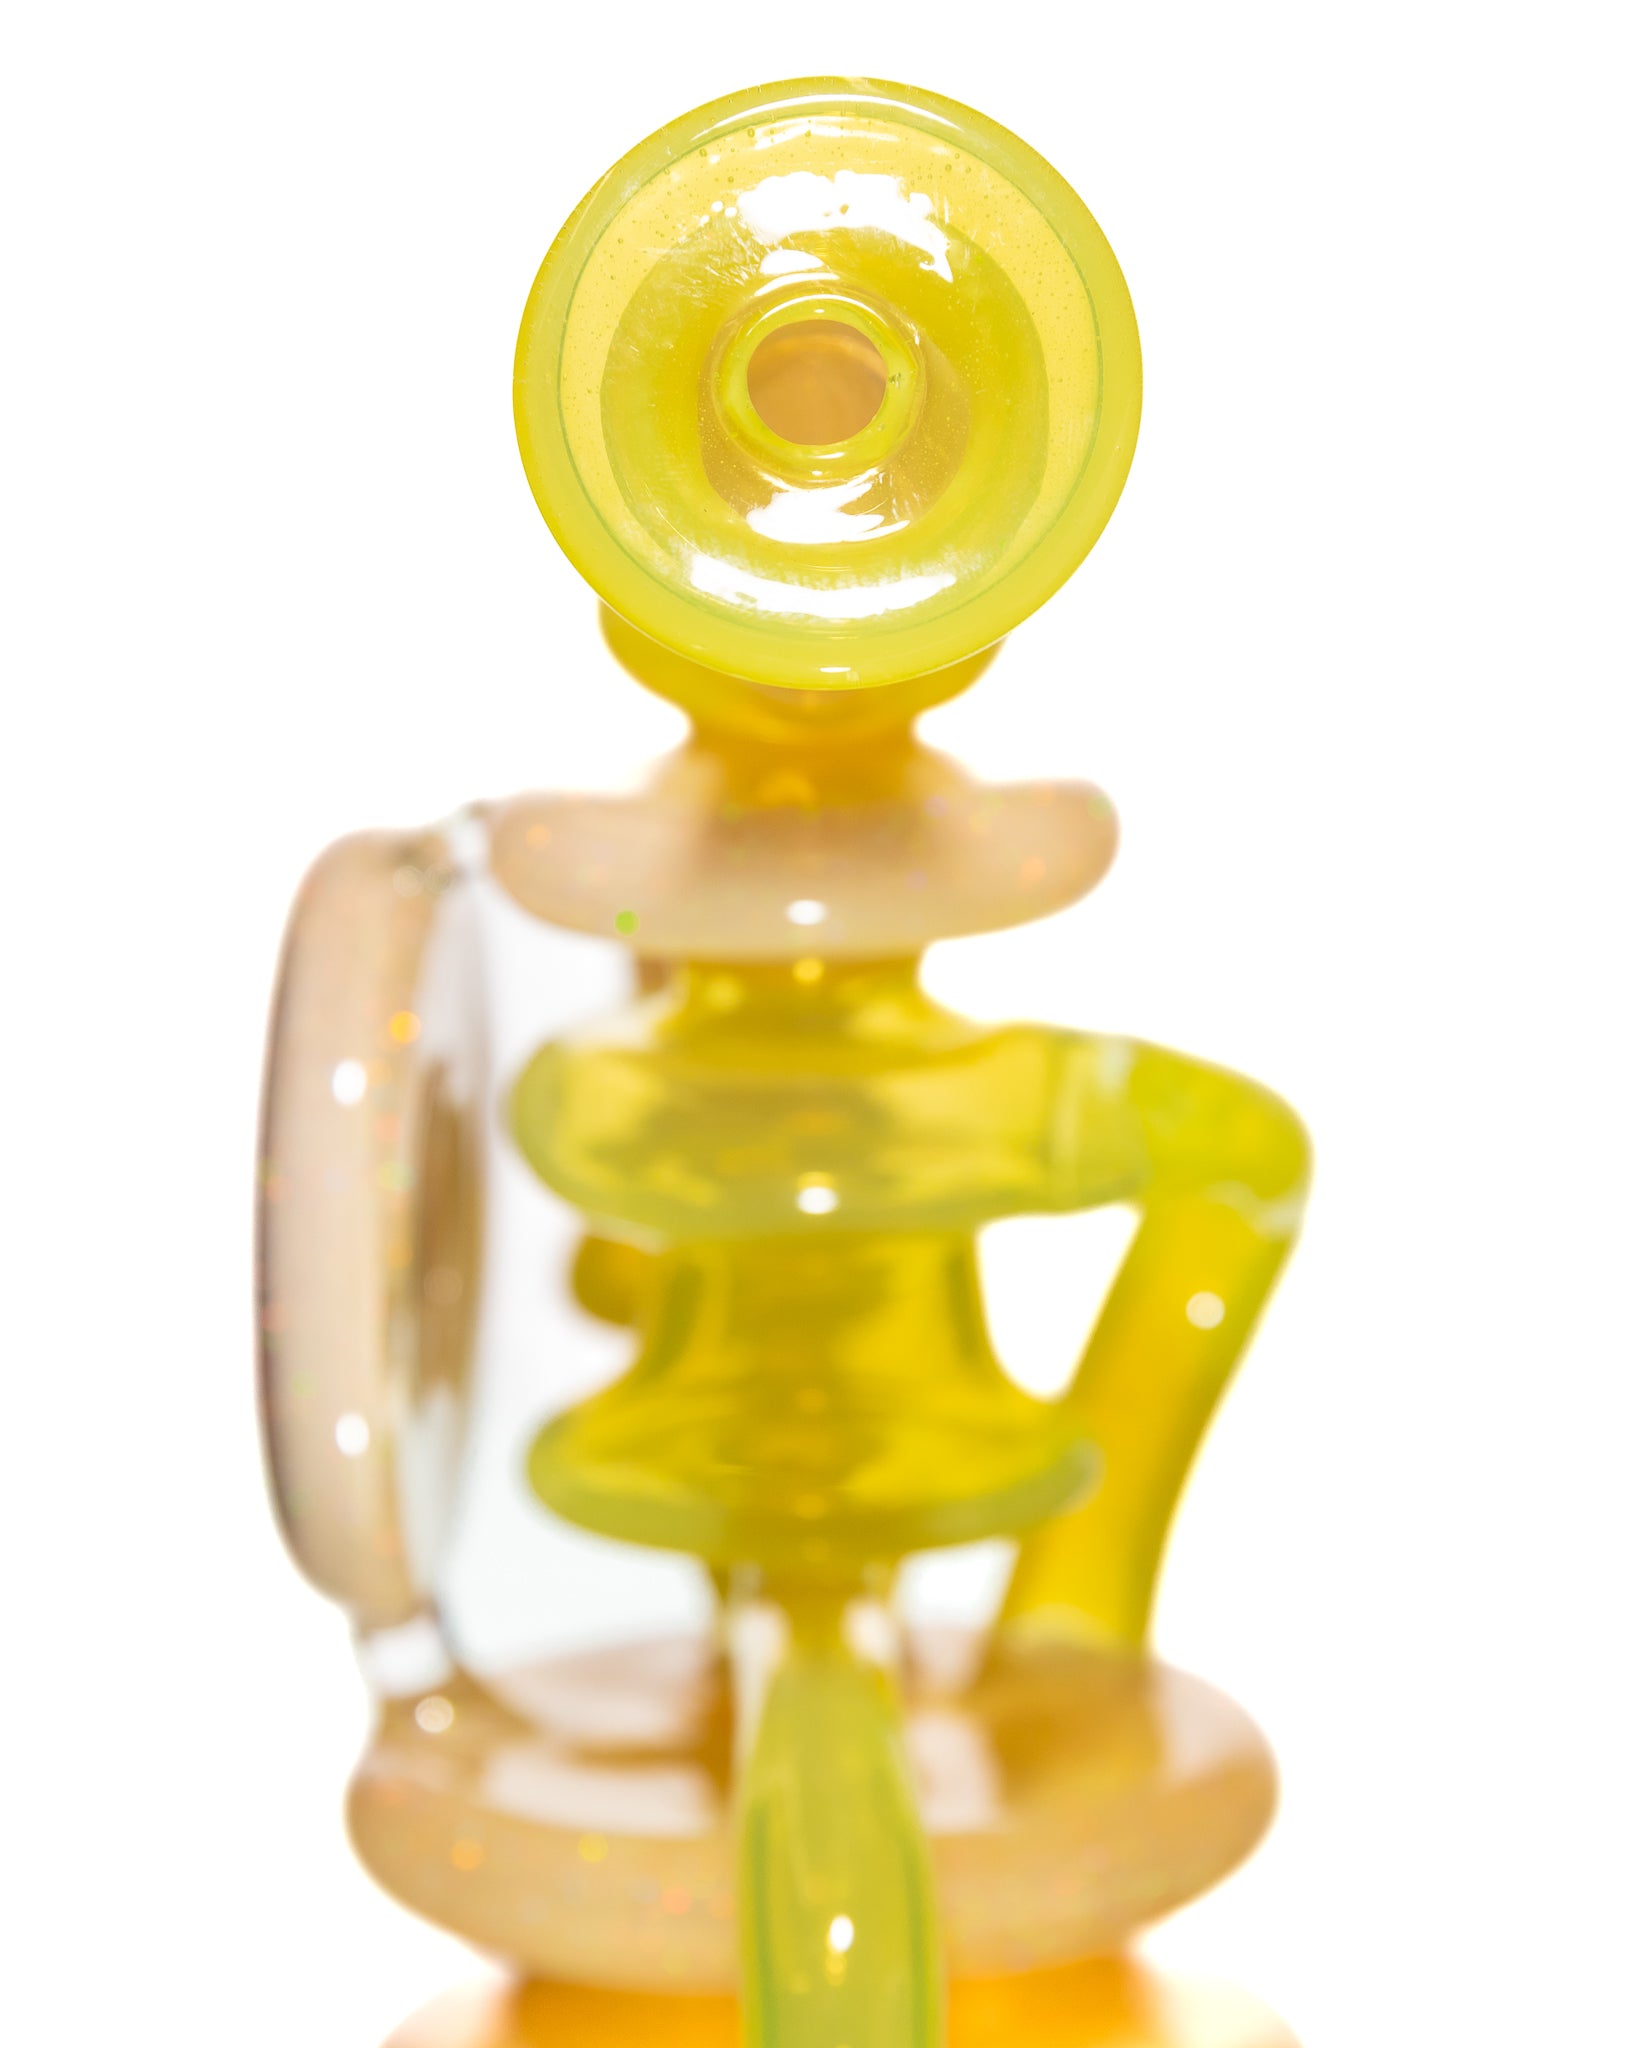 Freeek Glass - Yellow/Tan Single Uptake Terpcycler